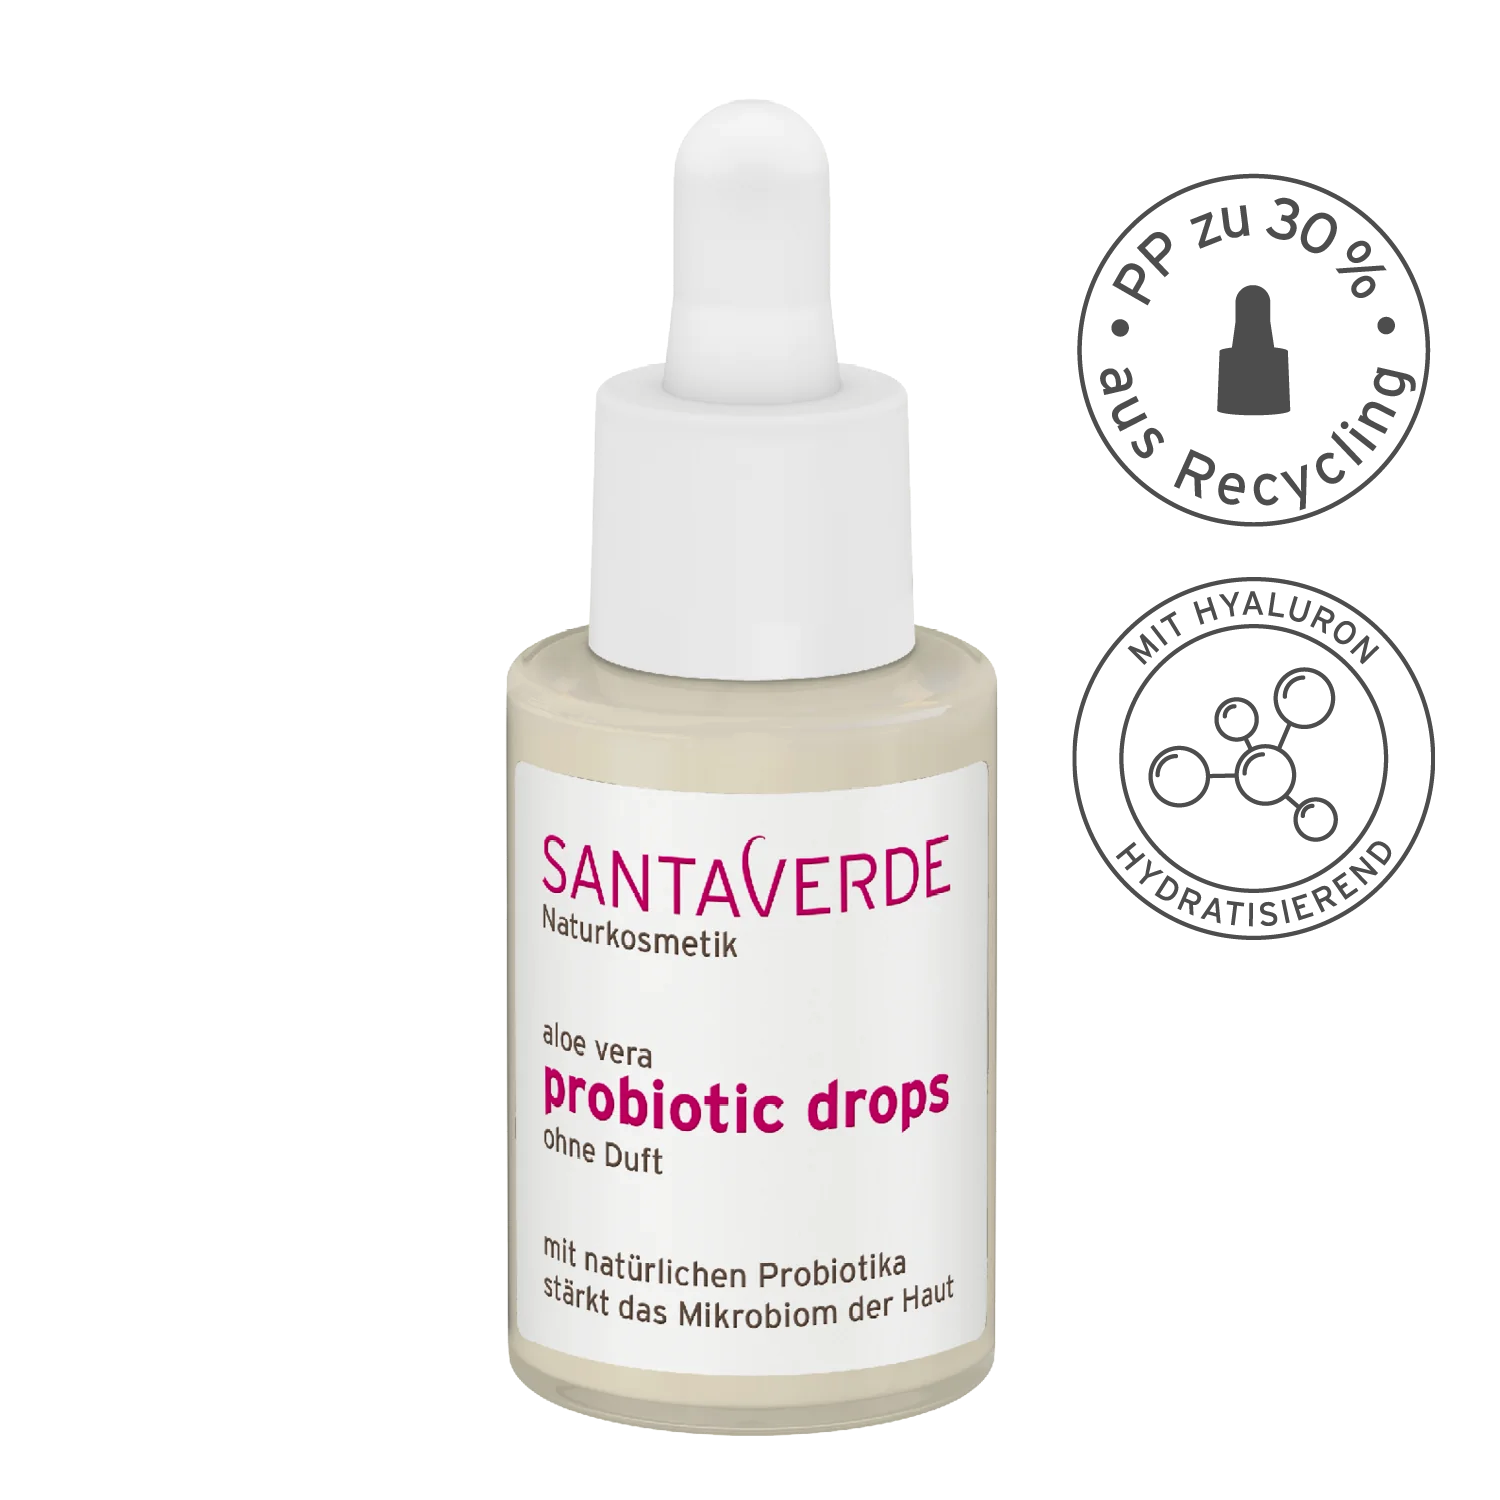 Santaverde probiotic drops | 30ml | Aloe Vera & ohne Duft